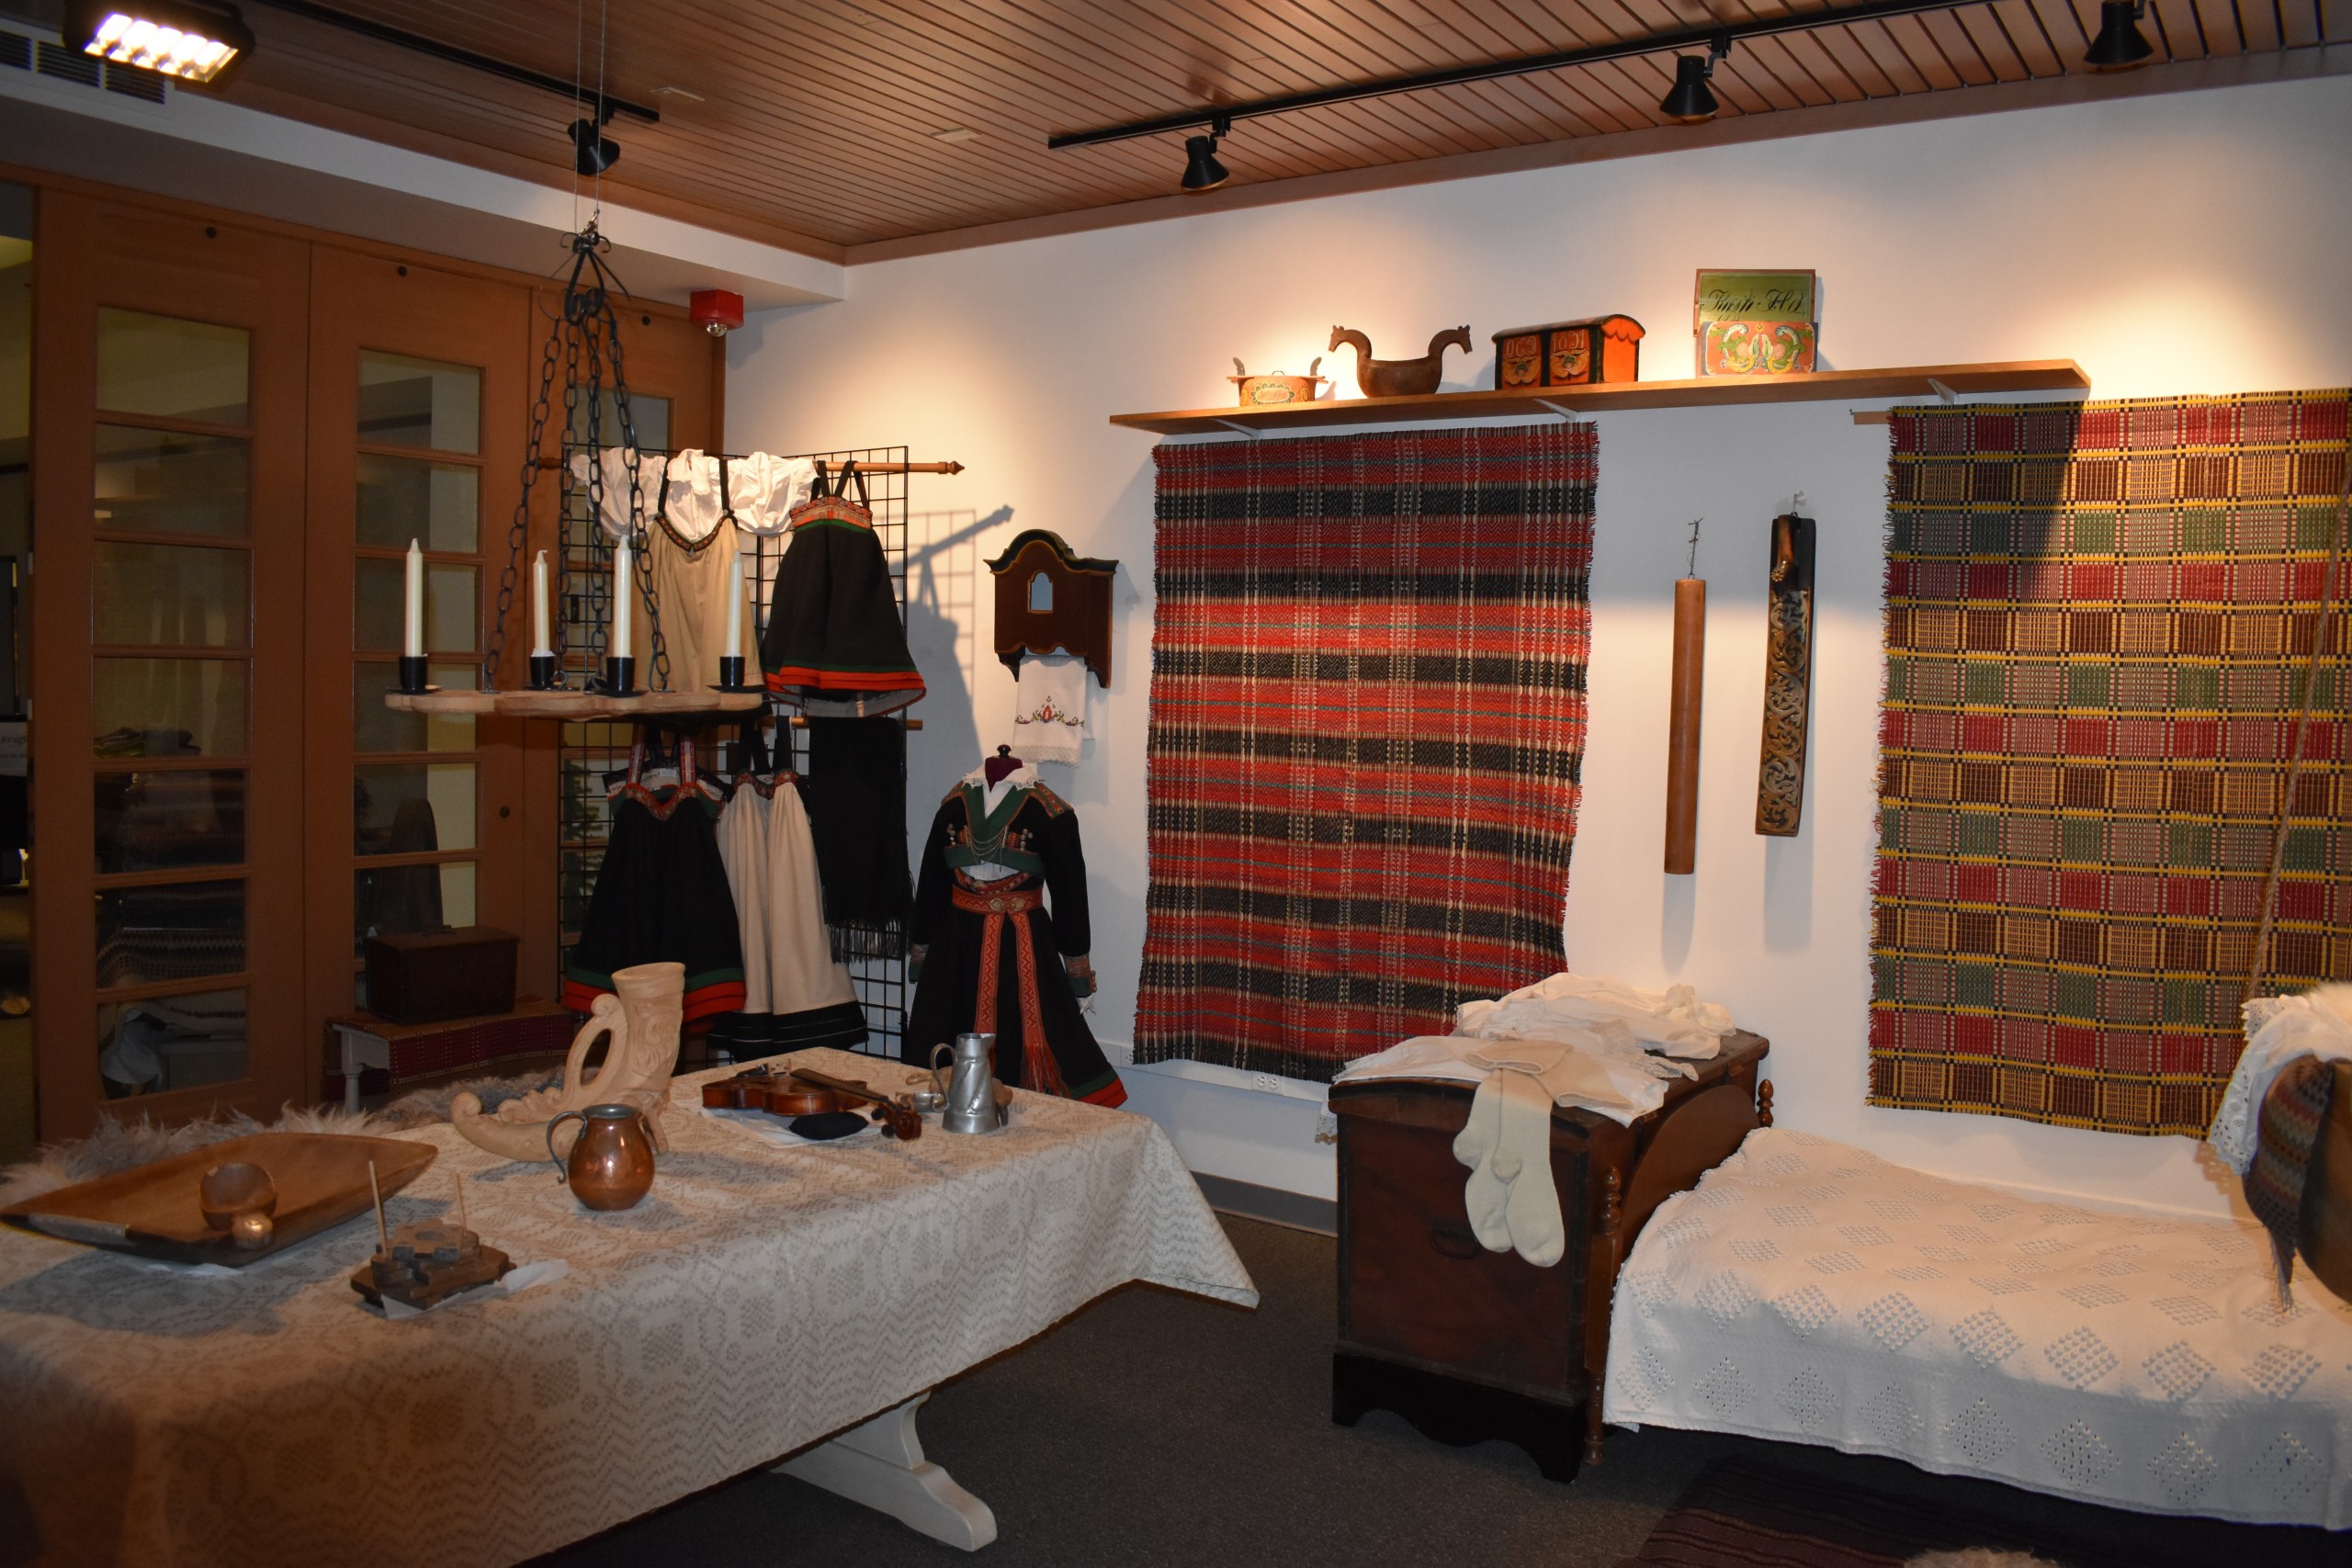 Stuen Room with textile exhibit